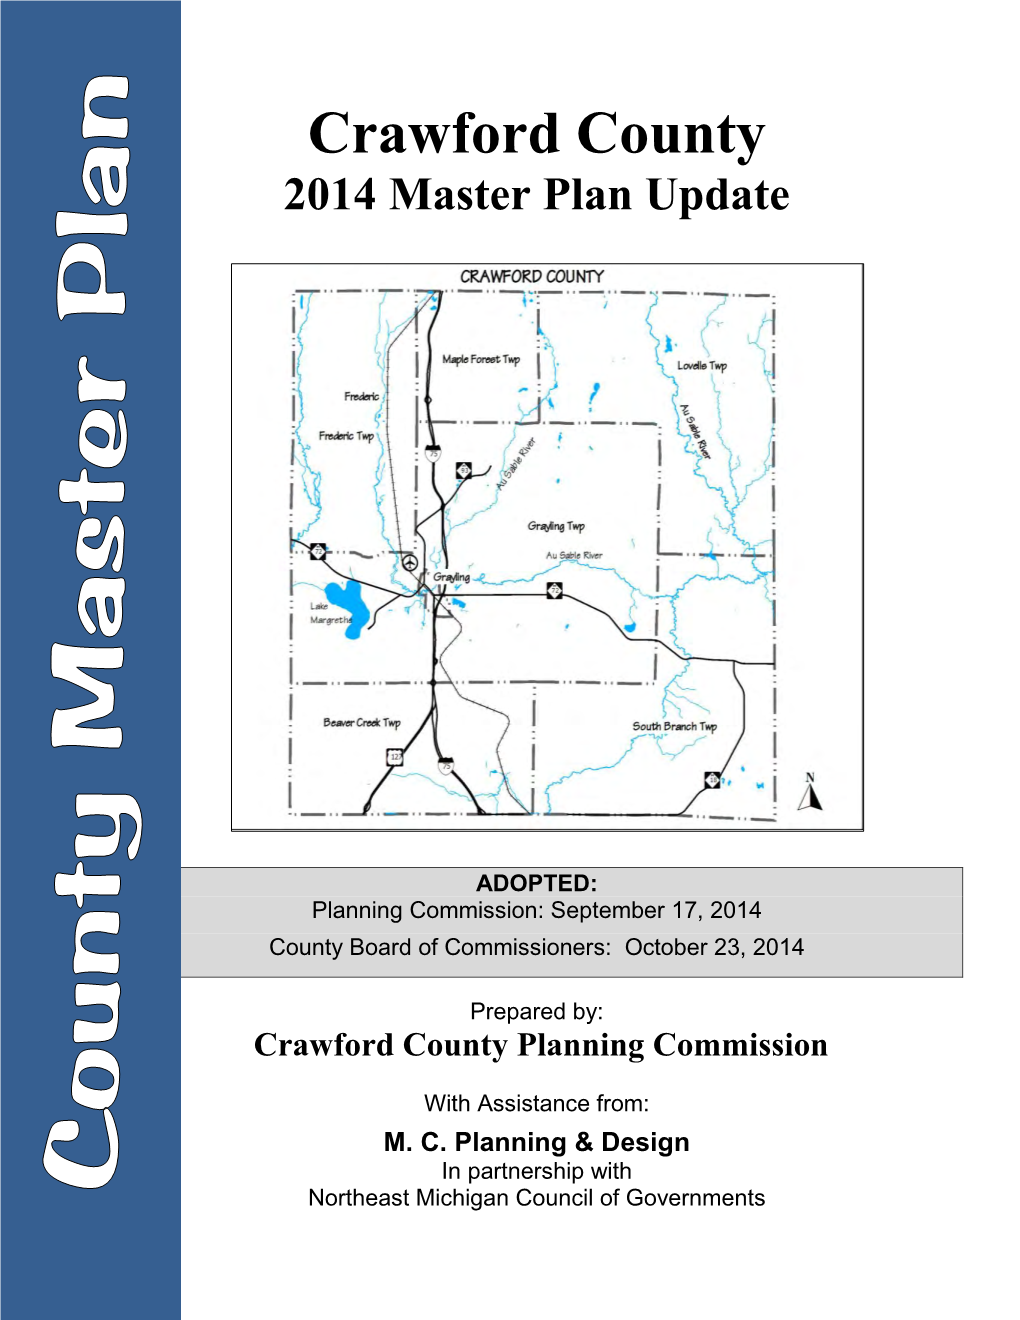 Crawford County 2014 Master Plan Update